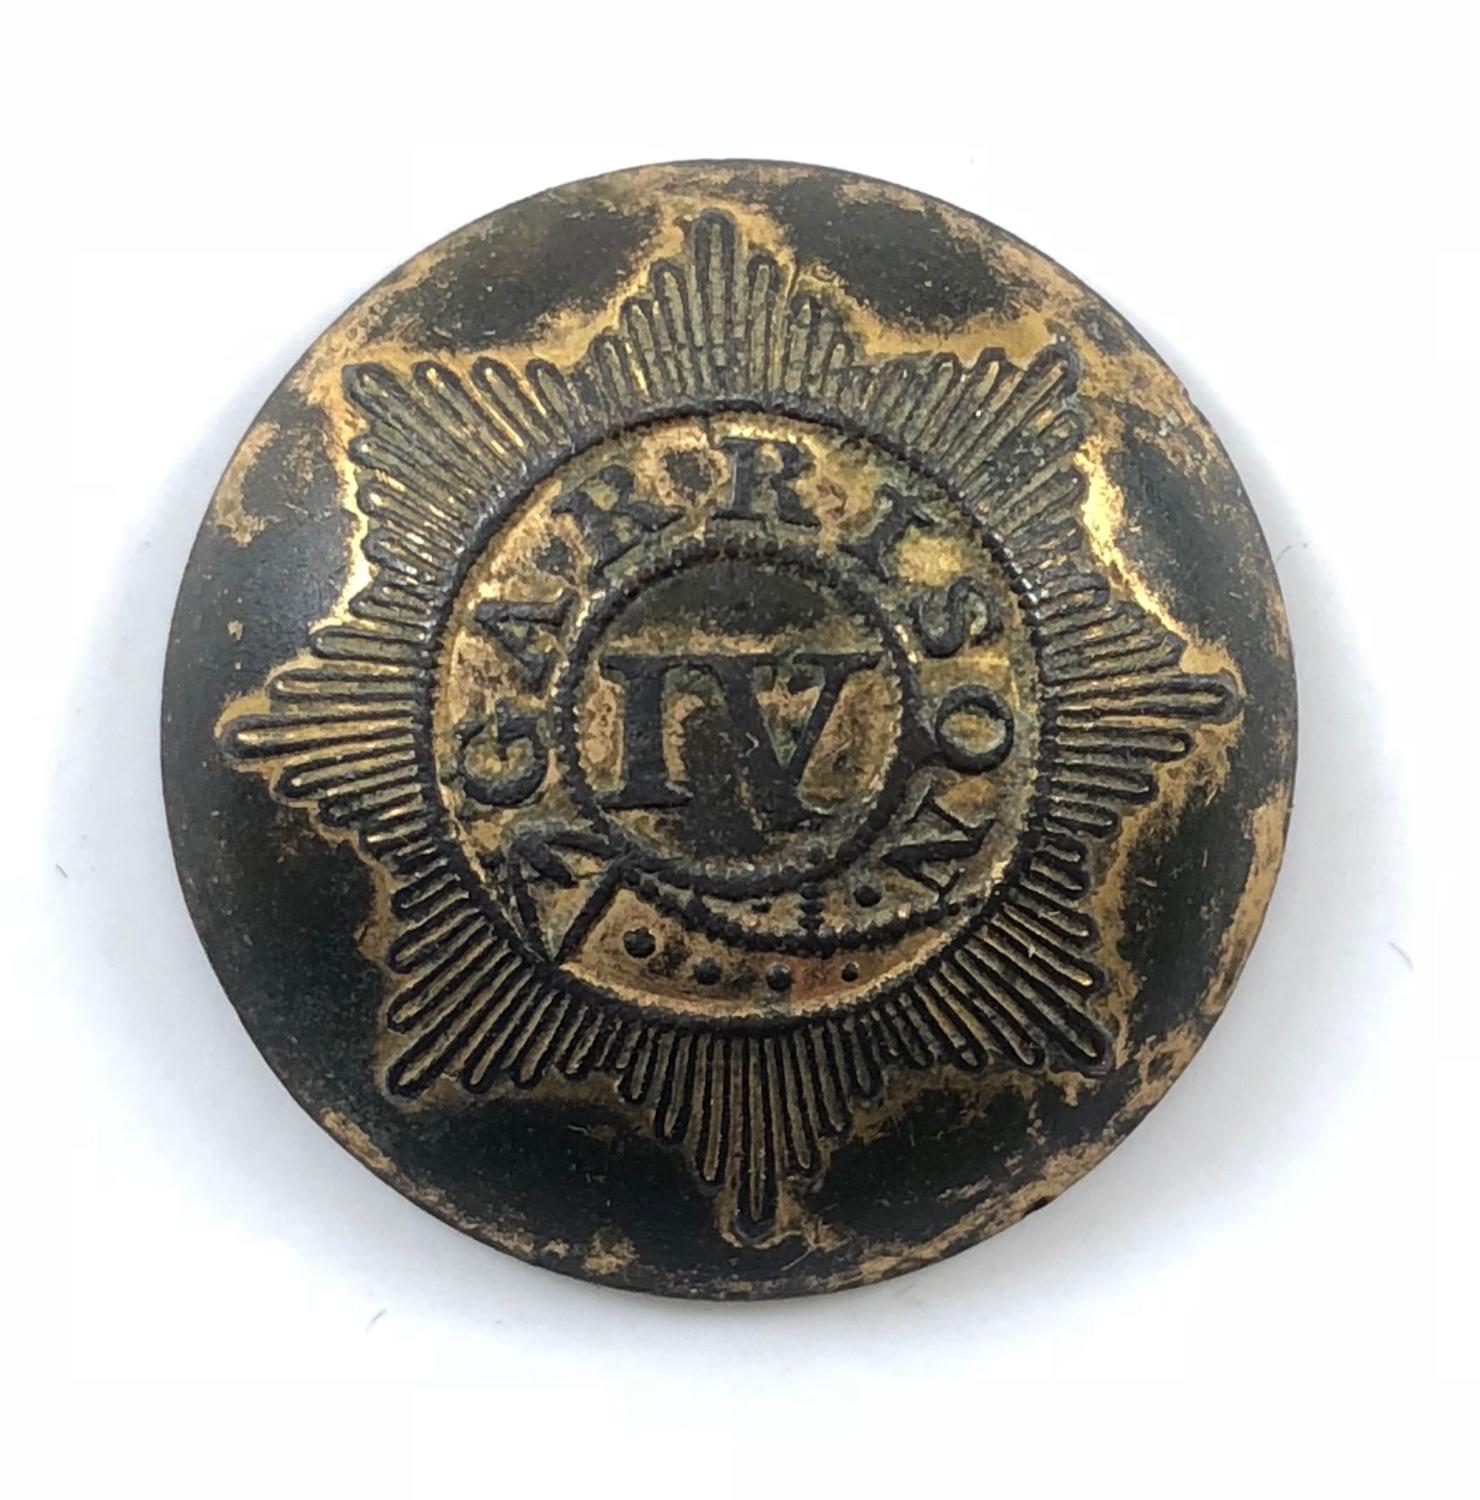 4th Garrison Battalion Georgian Officer’s gilt coatee button